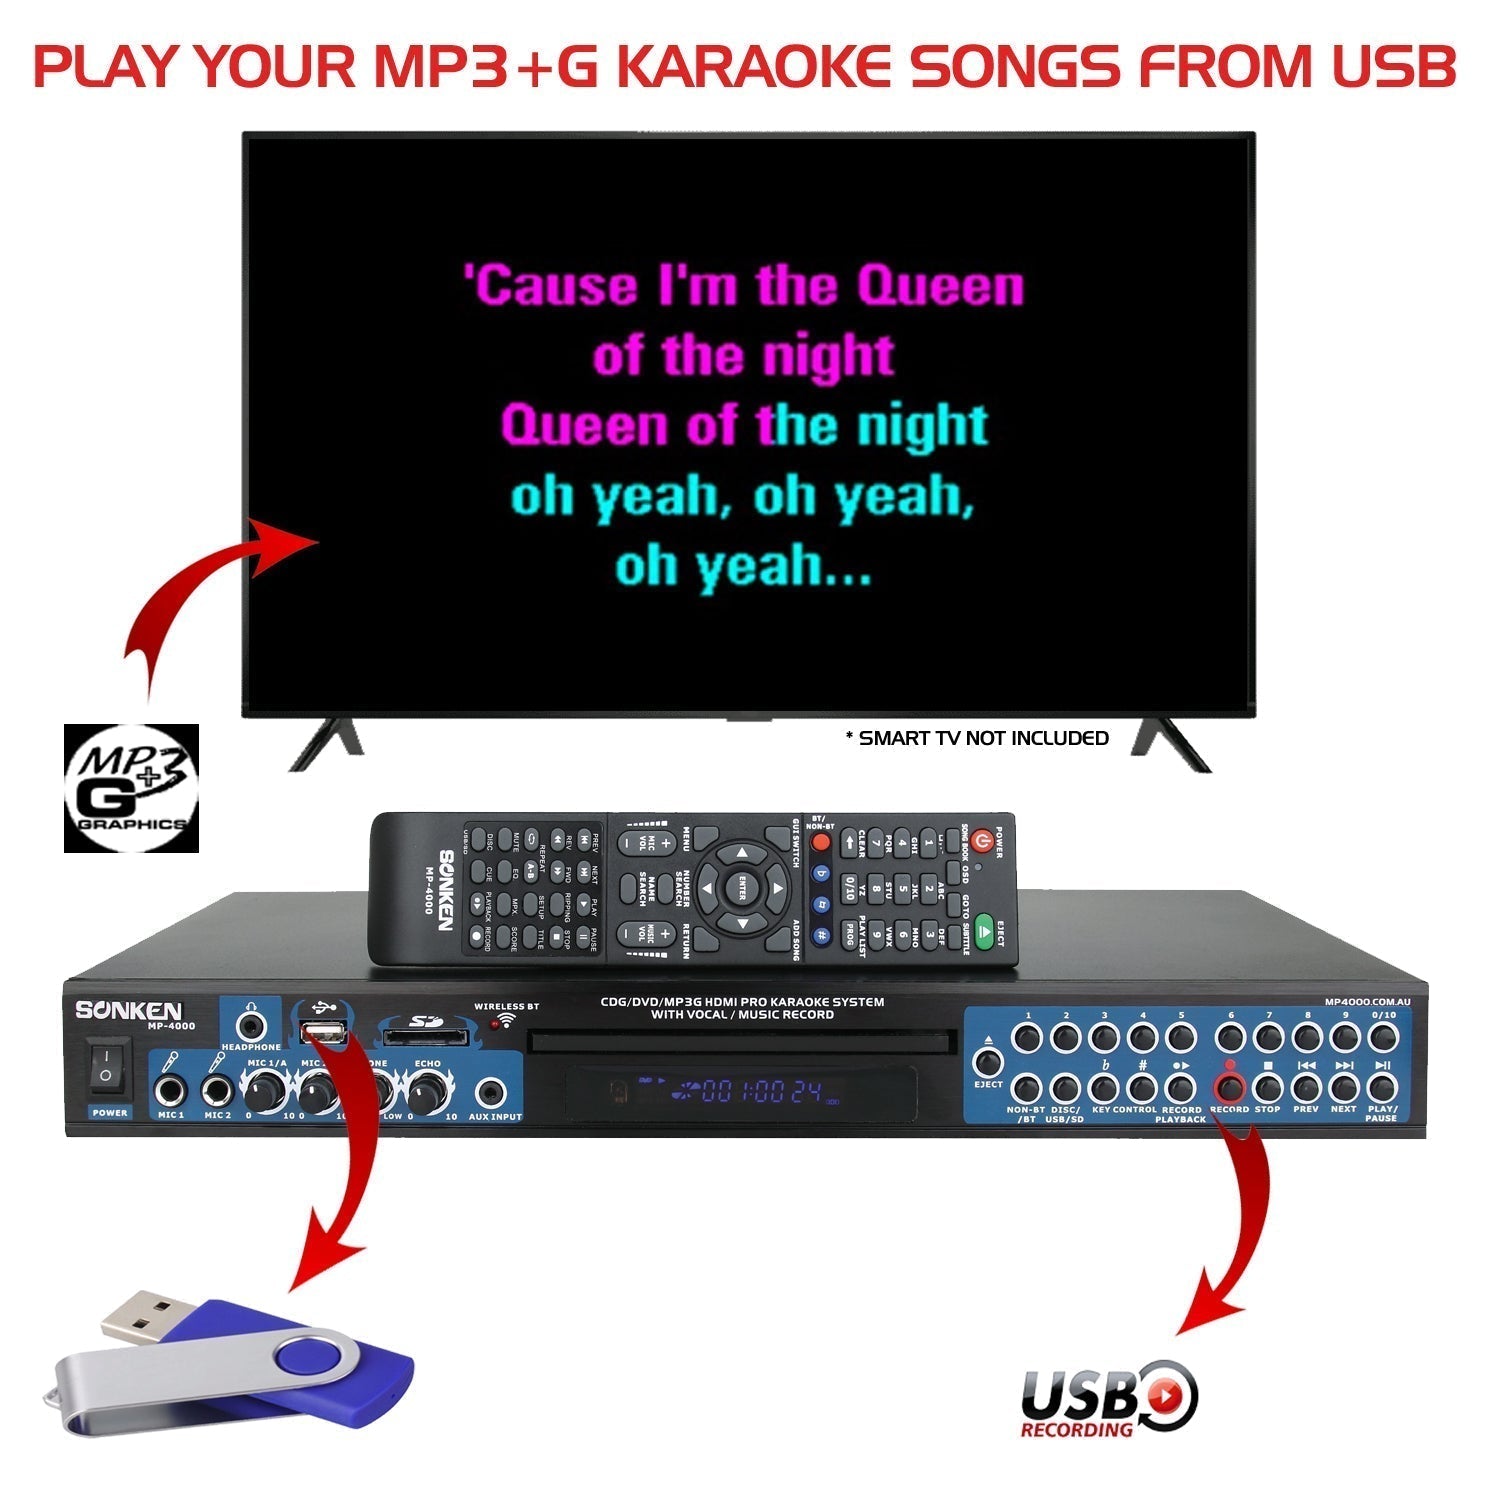 Sonken MP4000 Pro Karaoke Machine + 435 Songs from the 90's & 00's + 2 Wired Microphones - Karaoke Home Entertainment